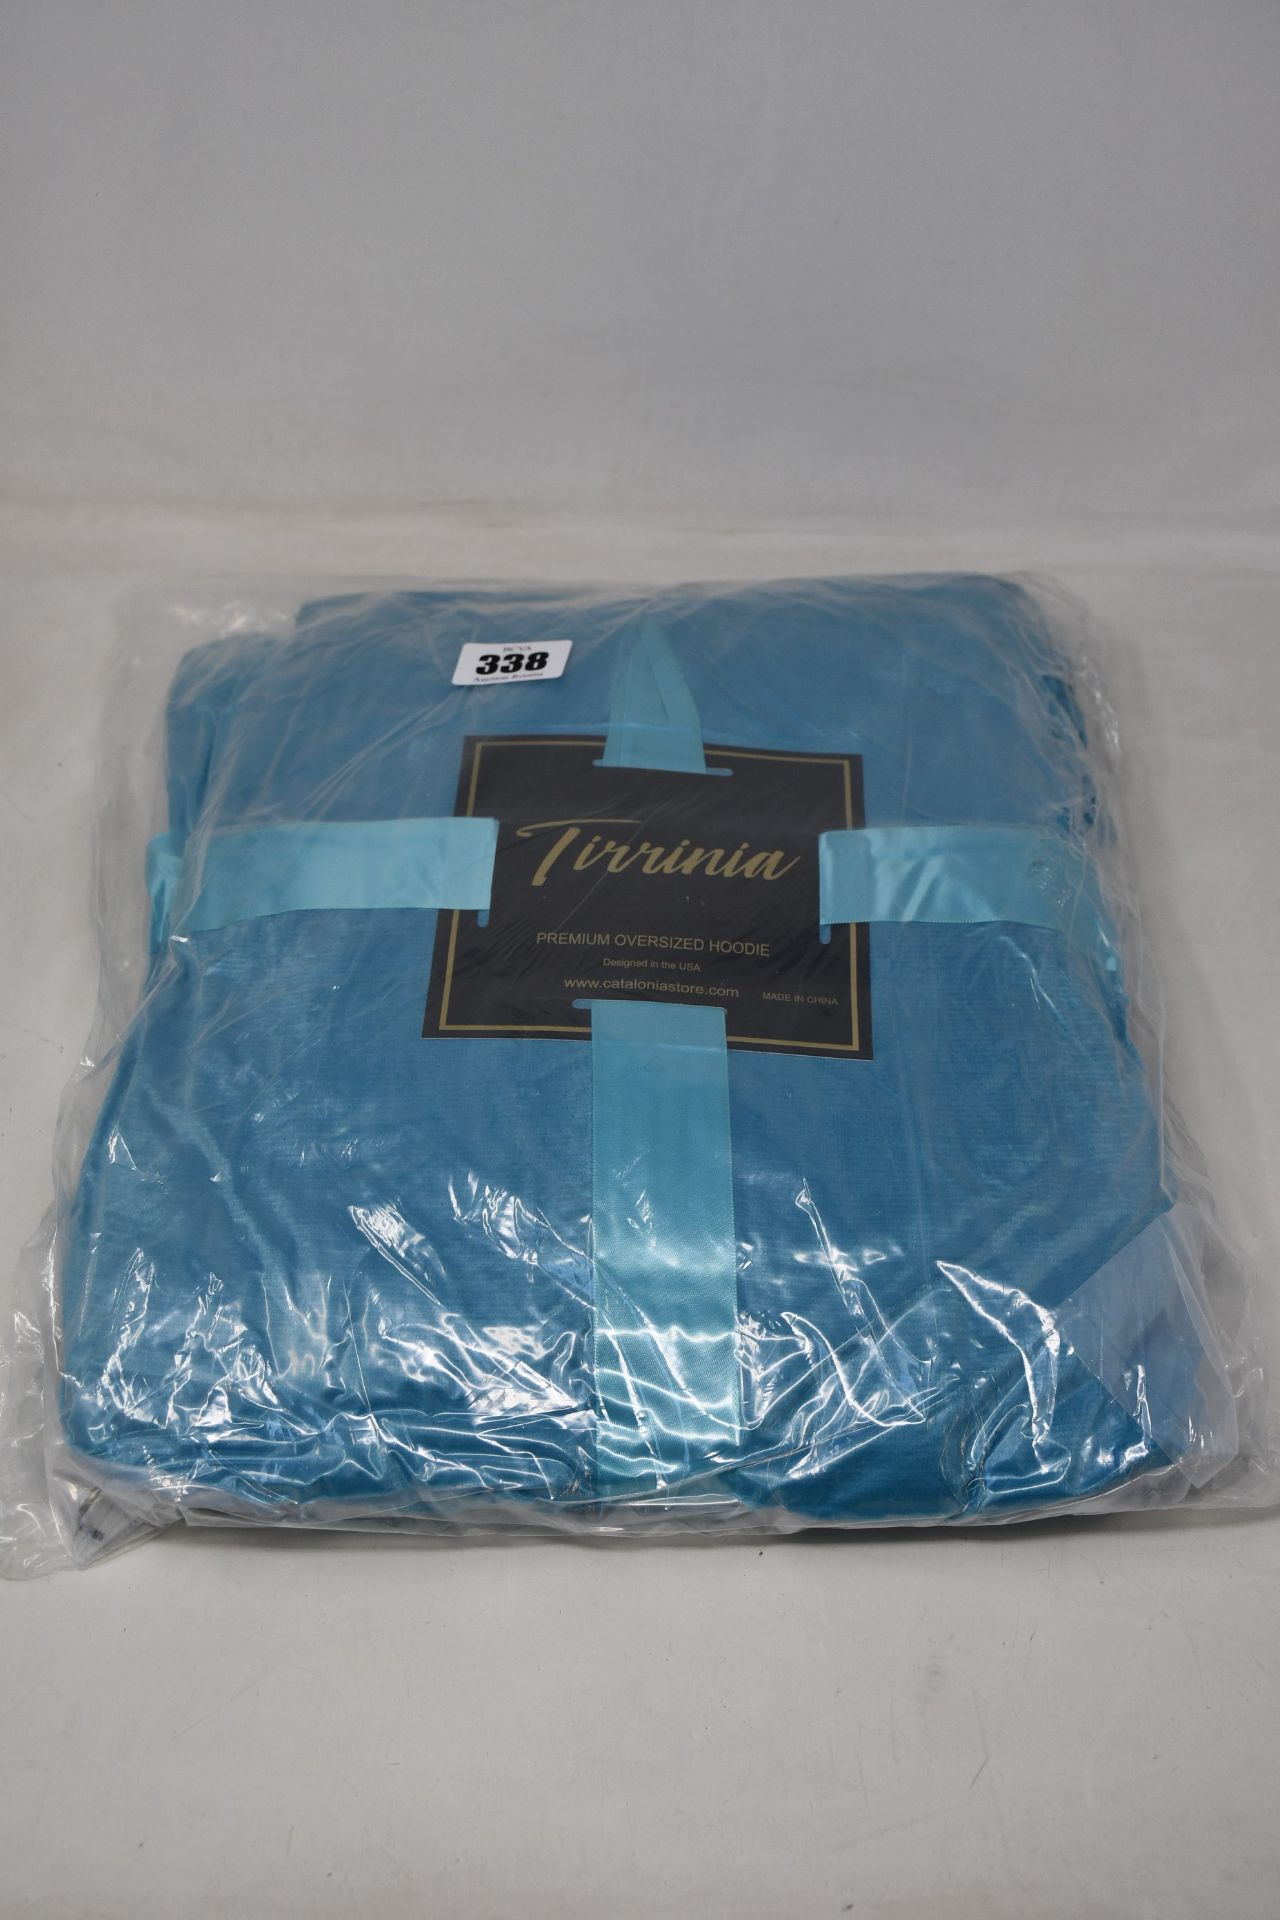 Three as new Tirriana oversized wearable blanket/giant hoodie (RRP £42 each).